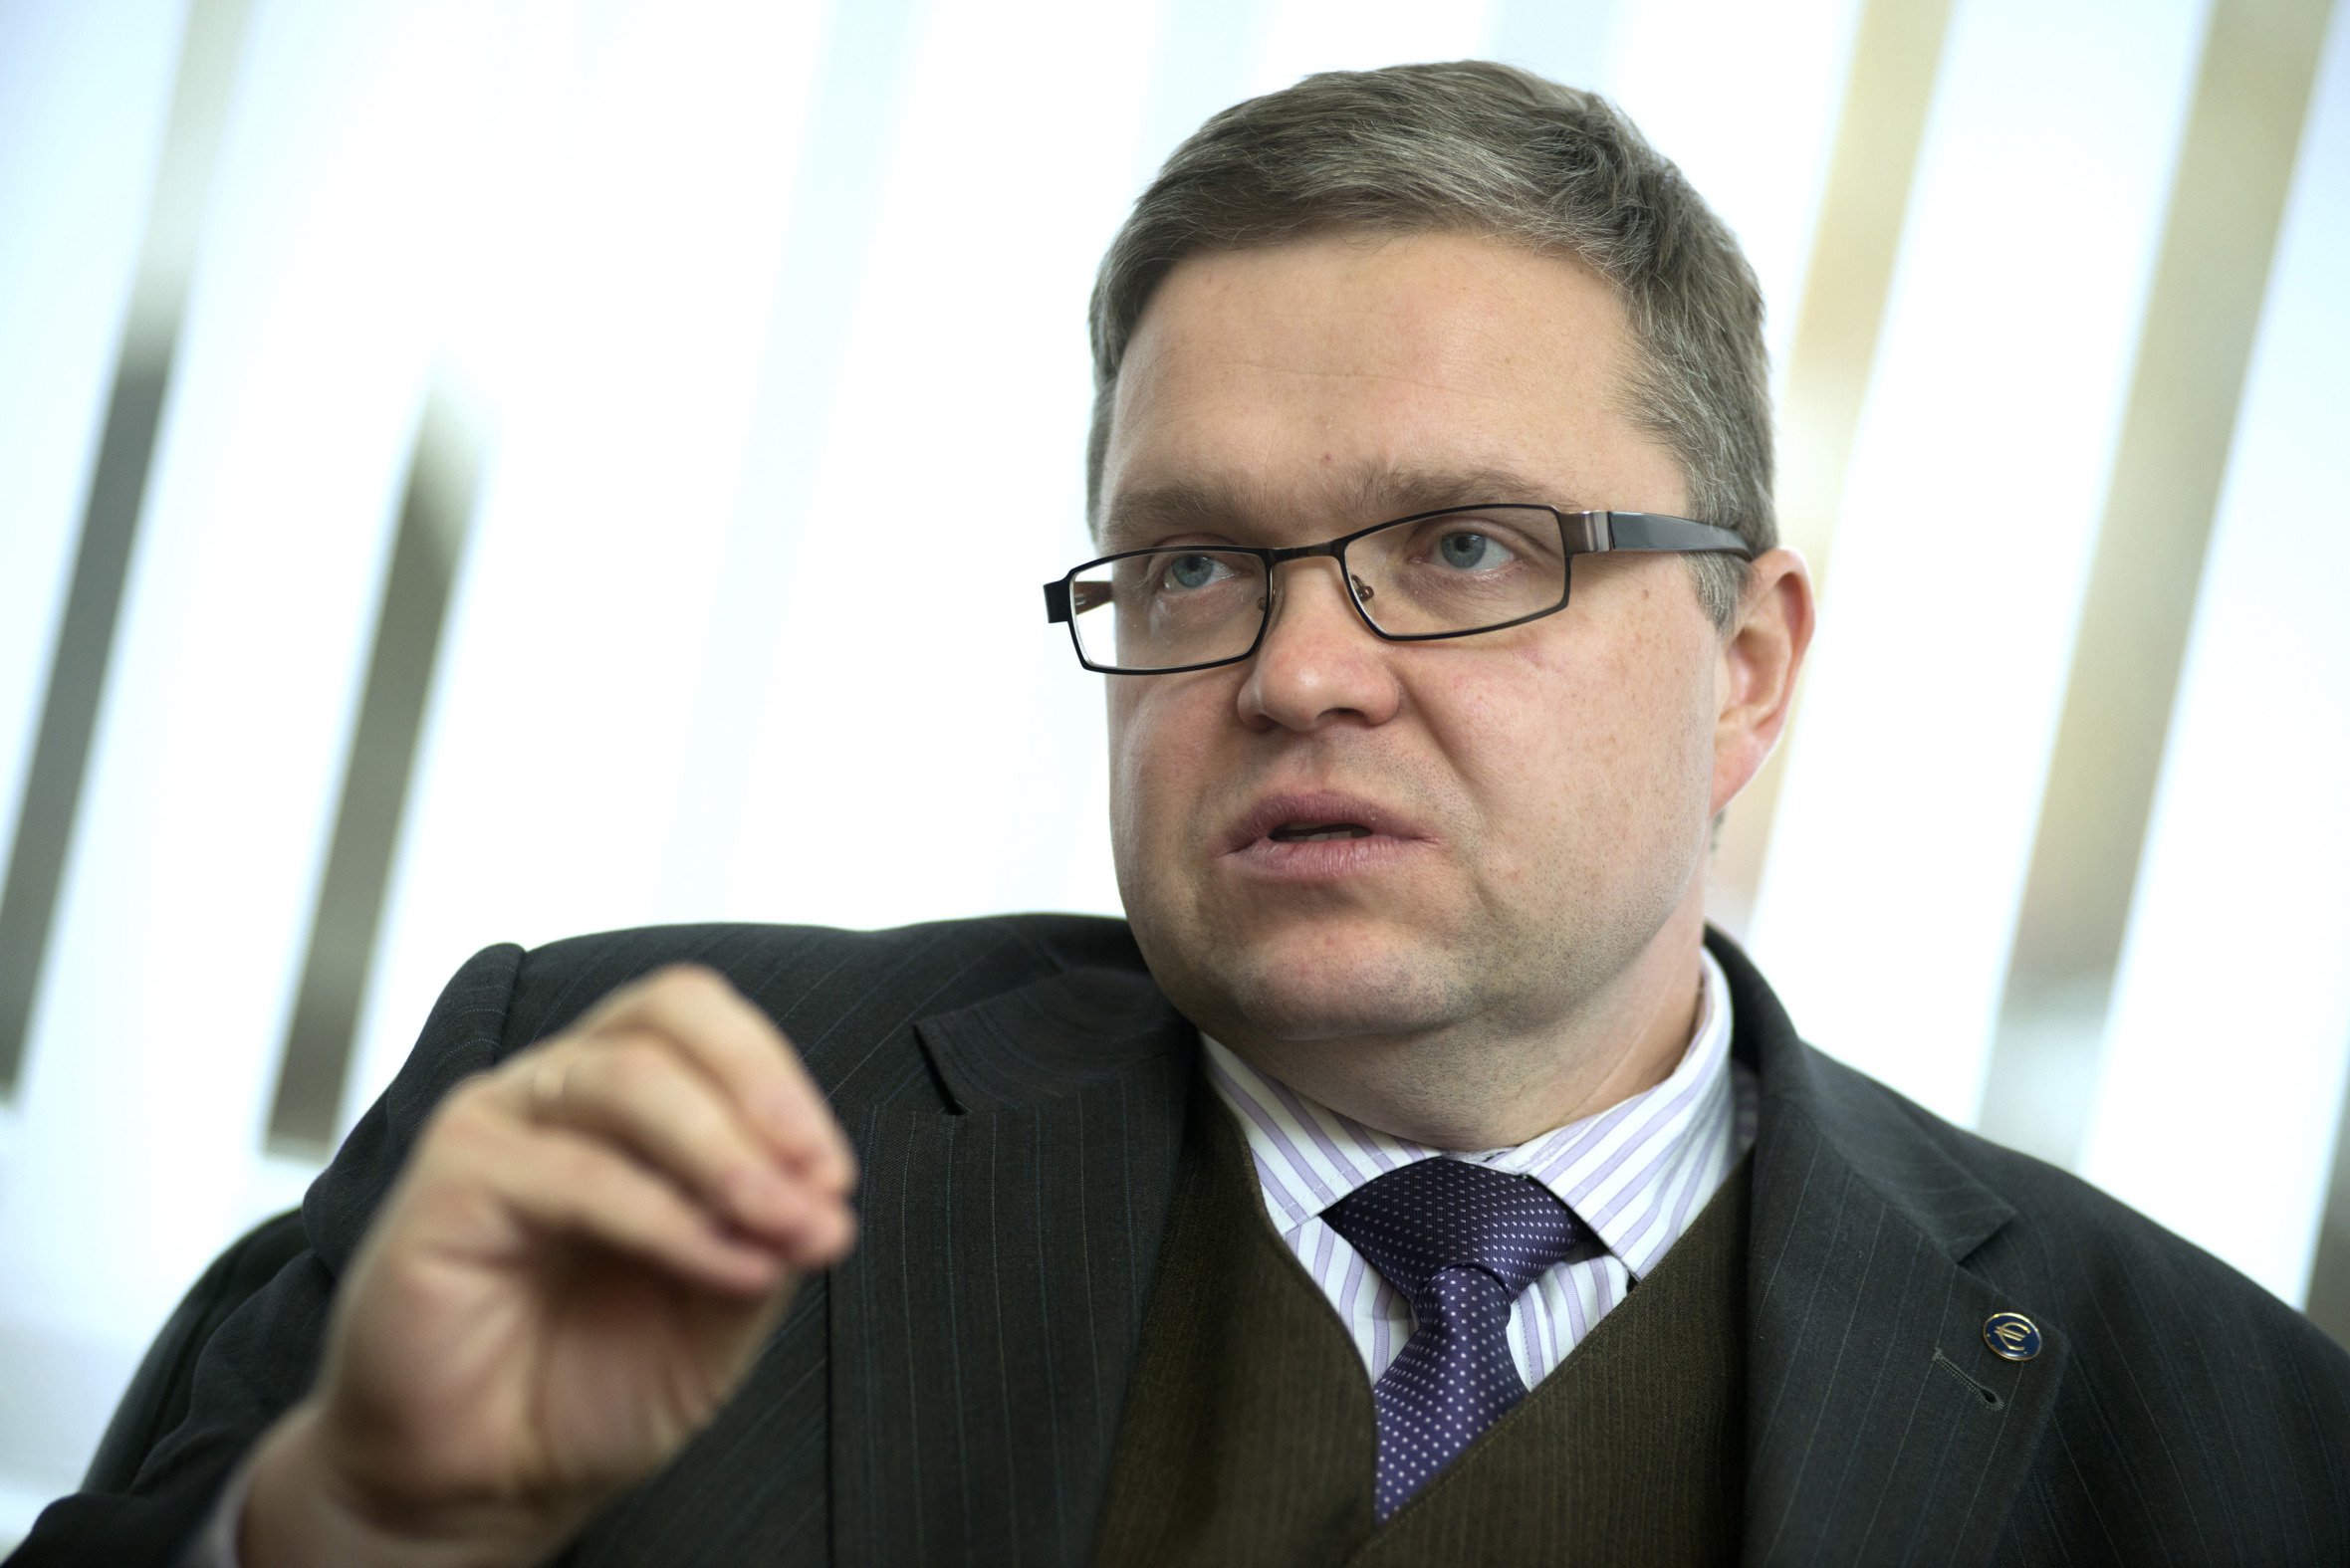 Vitas Vasiliauskas, governor of Lithuania's central bank.
